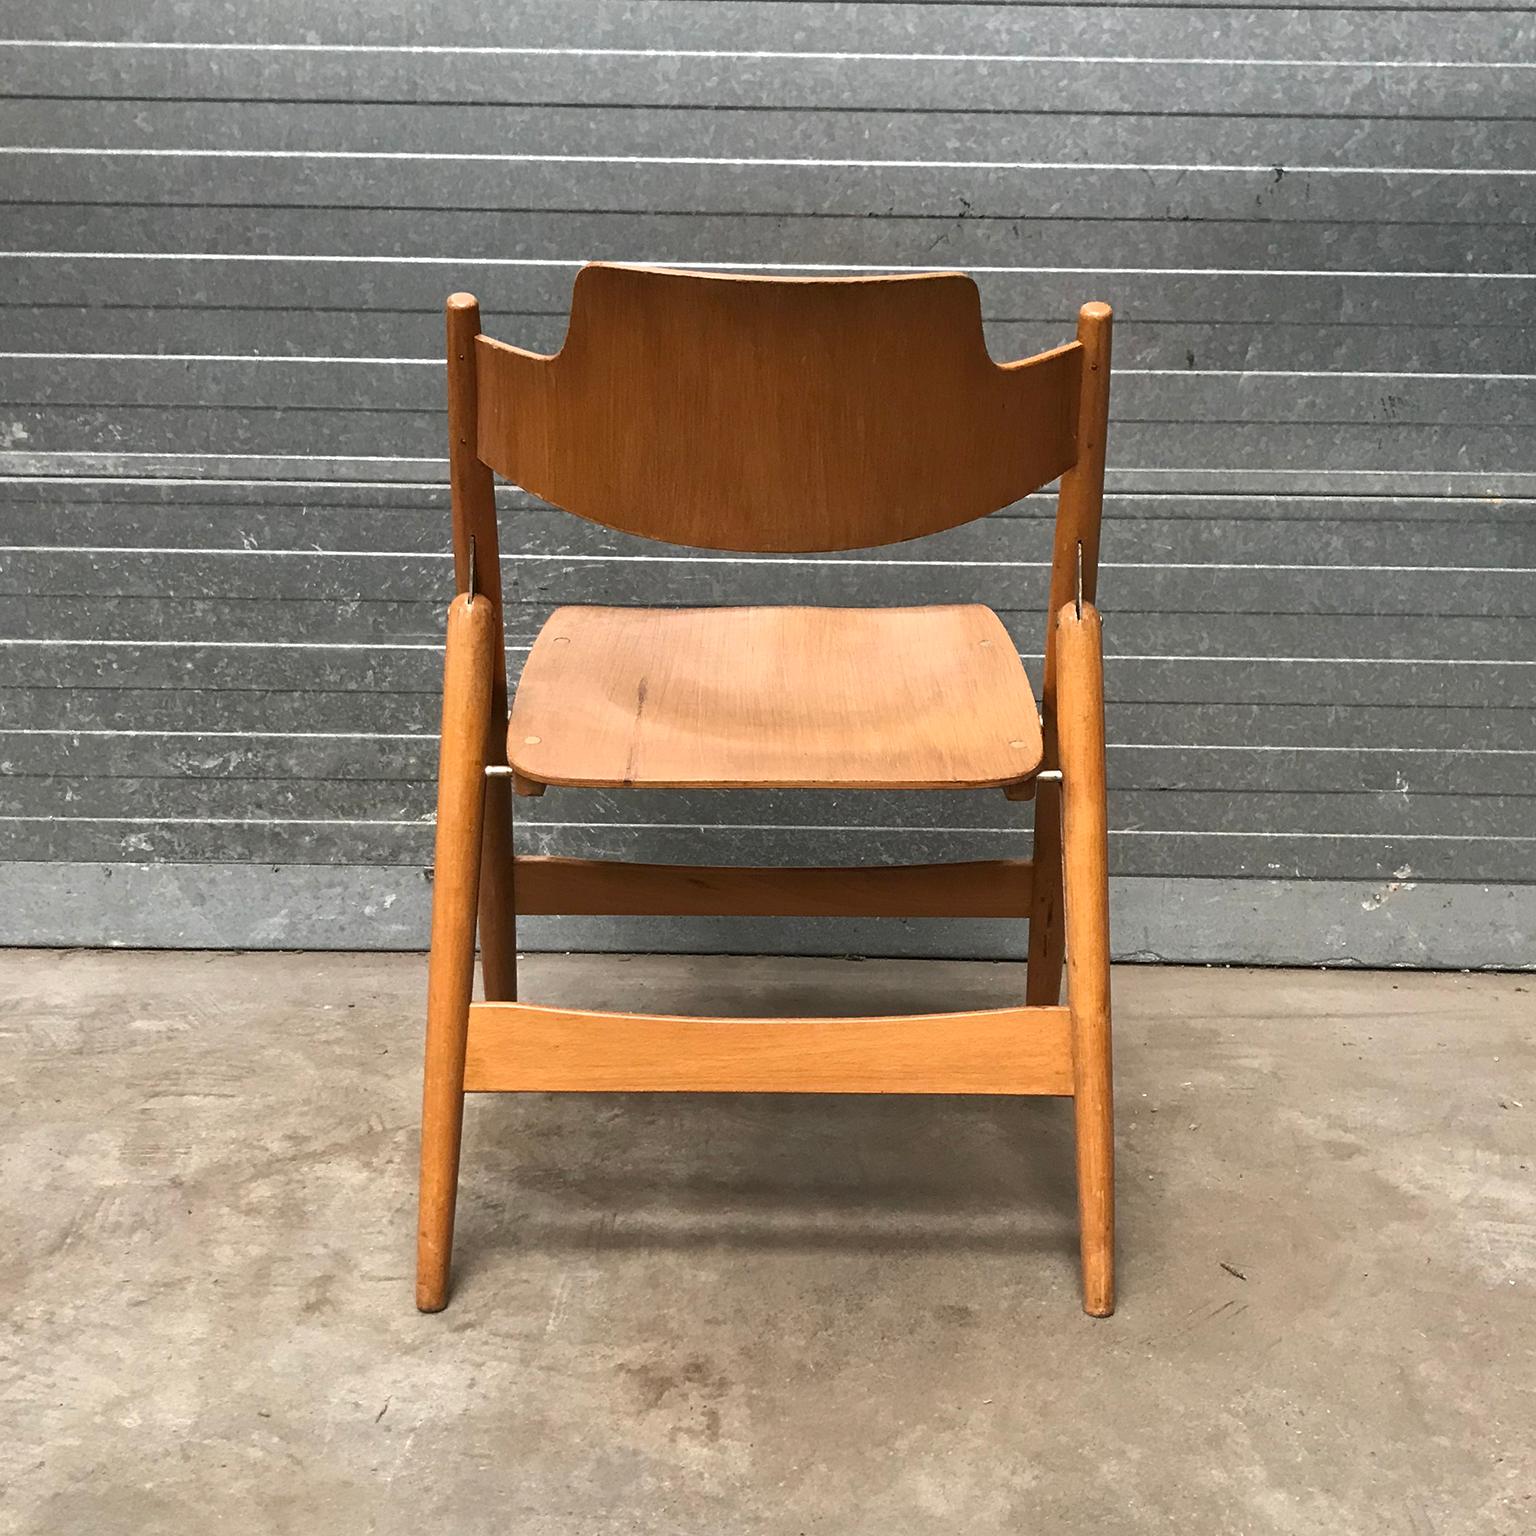 Mid-20th Century 1952, Egon Eiermann for Wilde & Spieth, Wooden Folding Chair For Sale